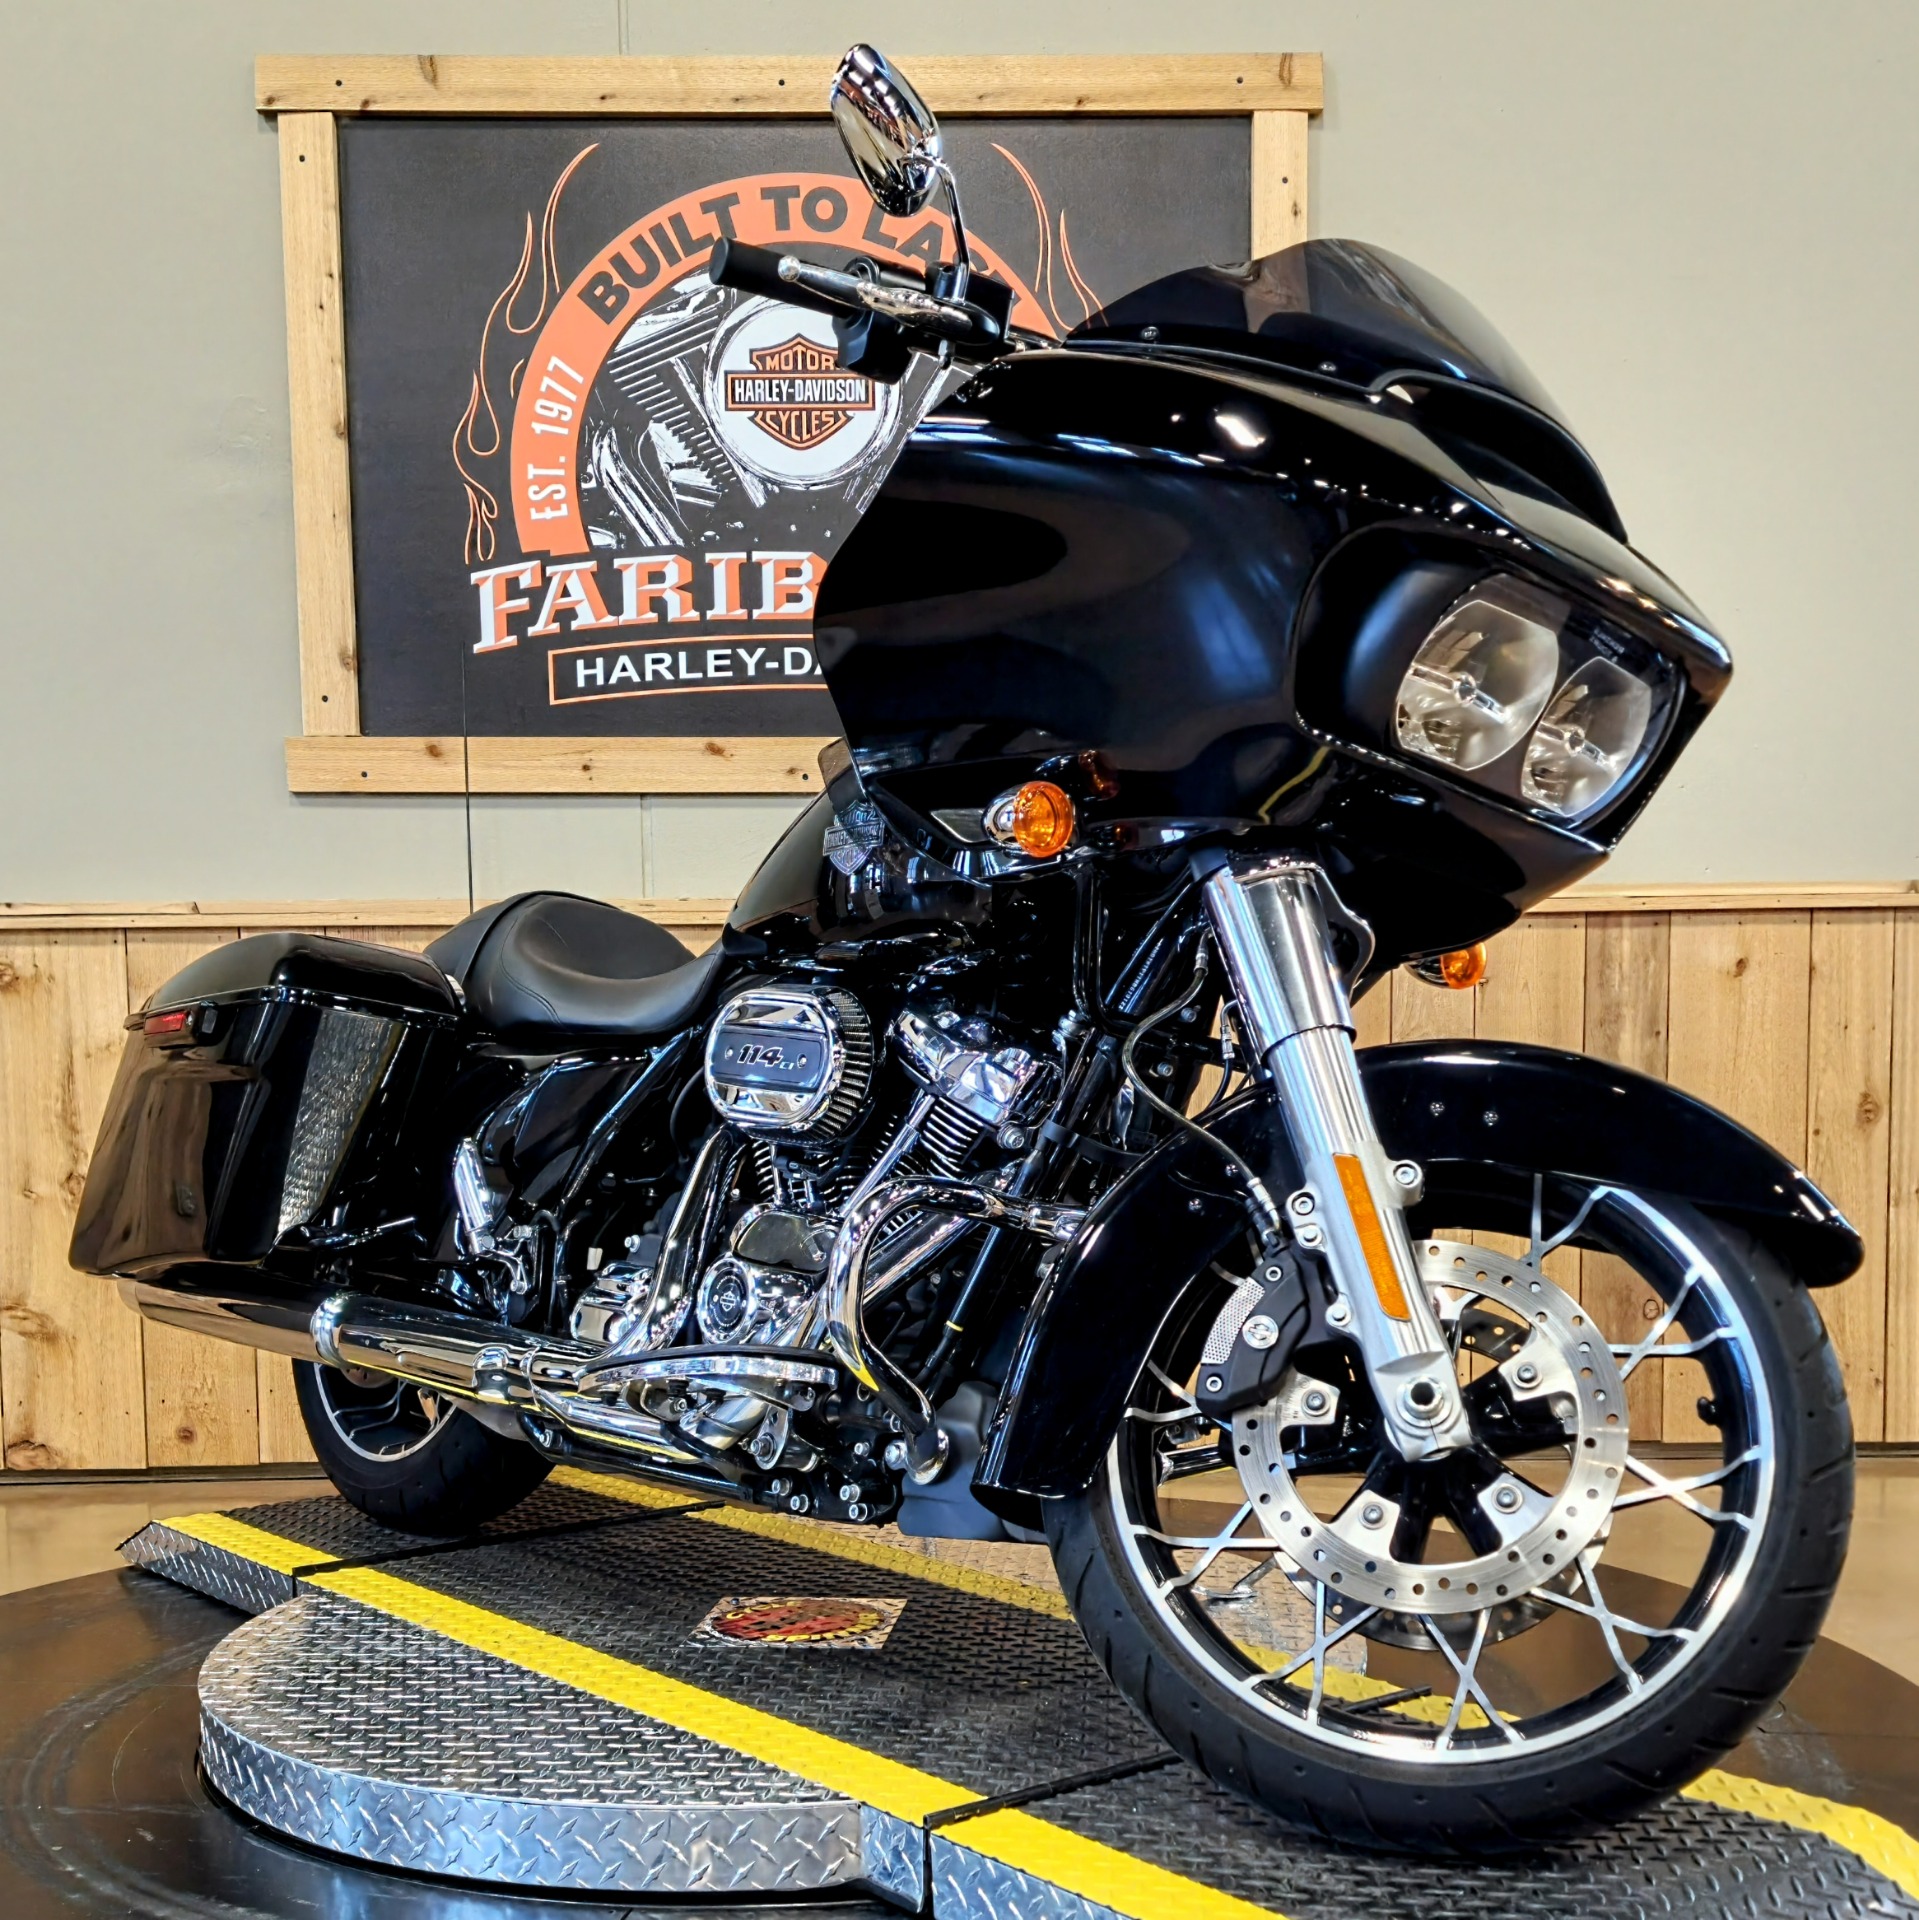 2022 Harley-Davidson Road Glide® Special in Faribault, Minnesota - Photo 2